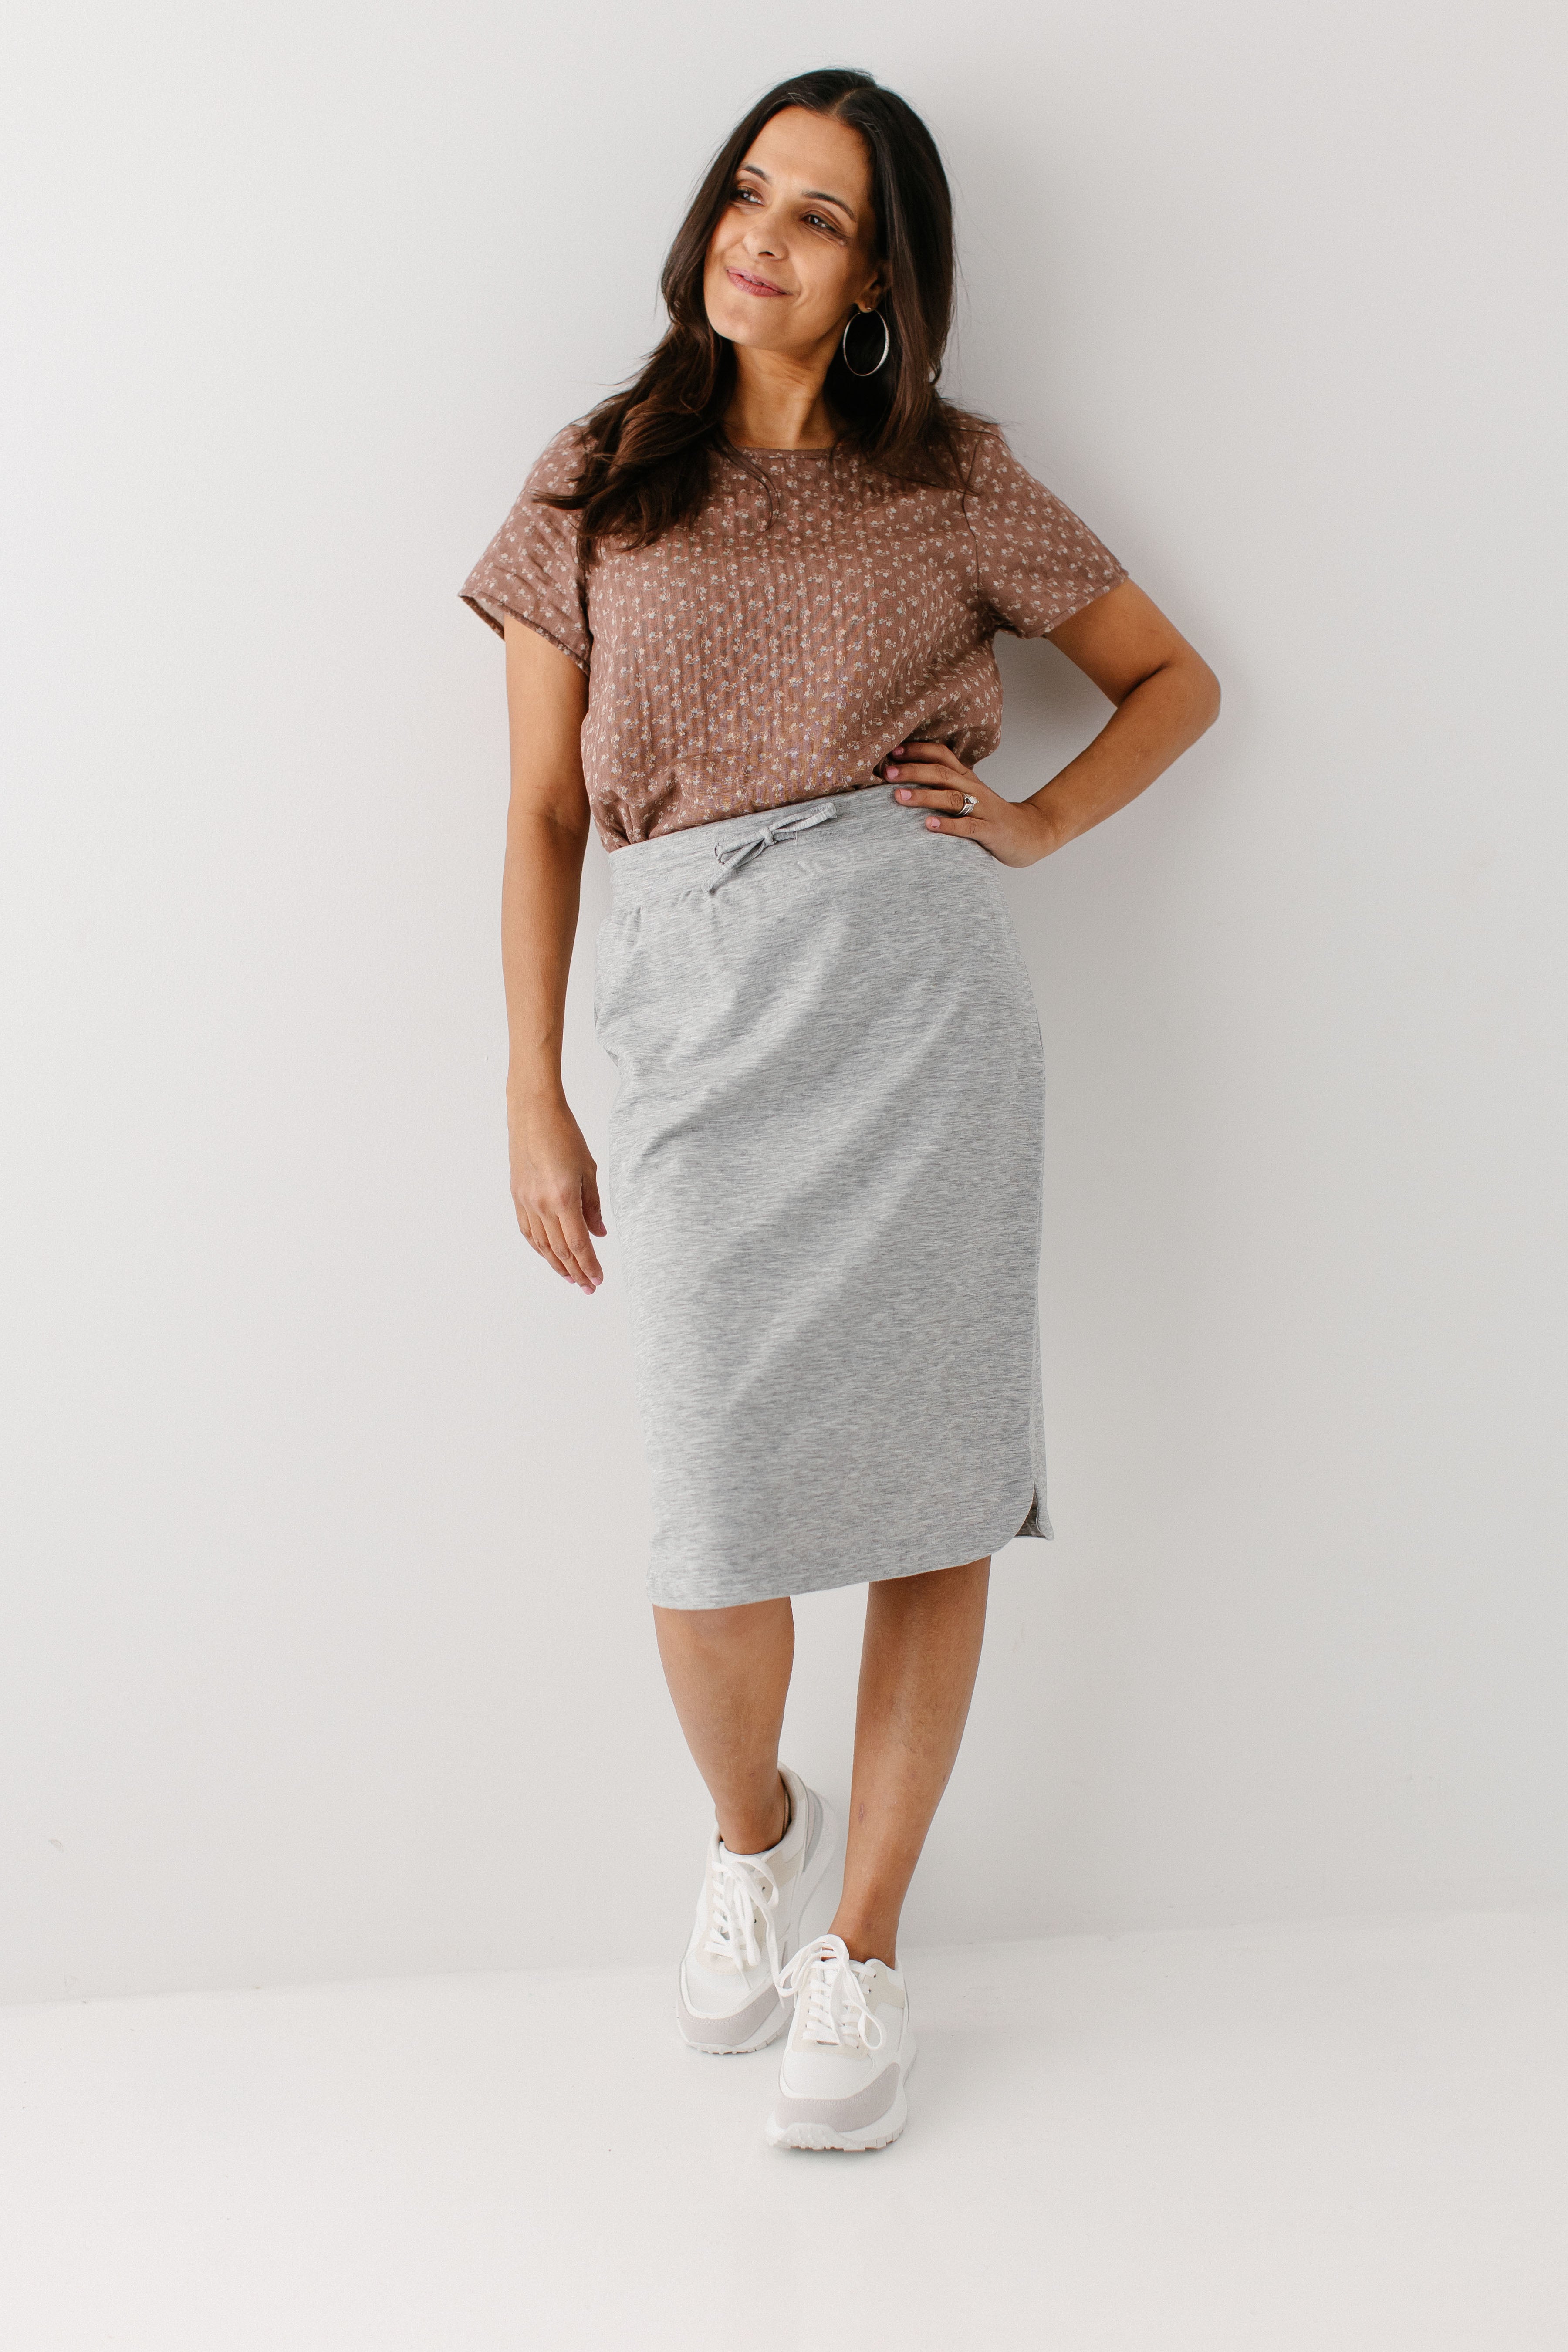 'Olivia' Skirt in Heather Grey FINAL SALE – The Main Street Exchange